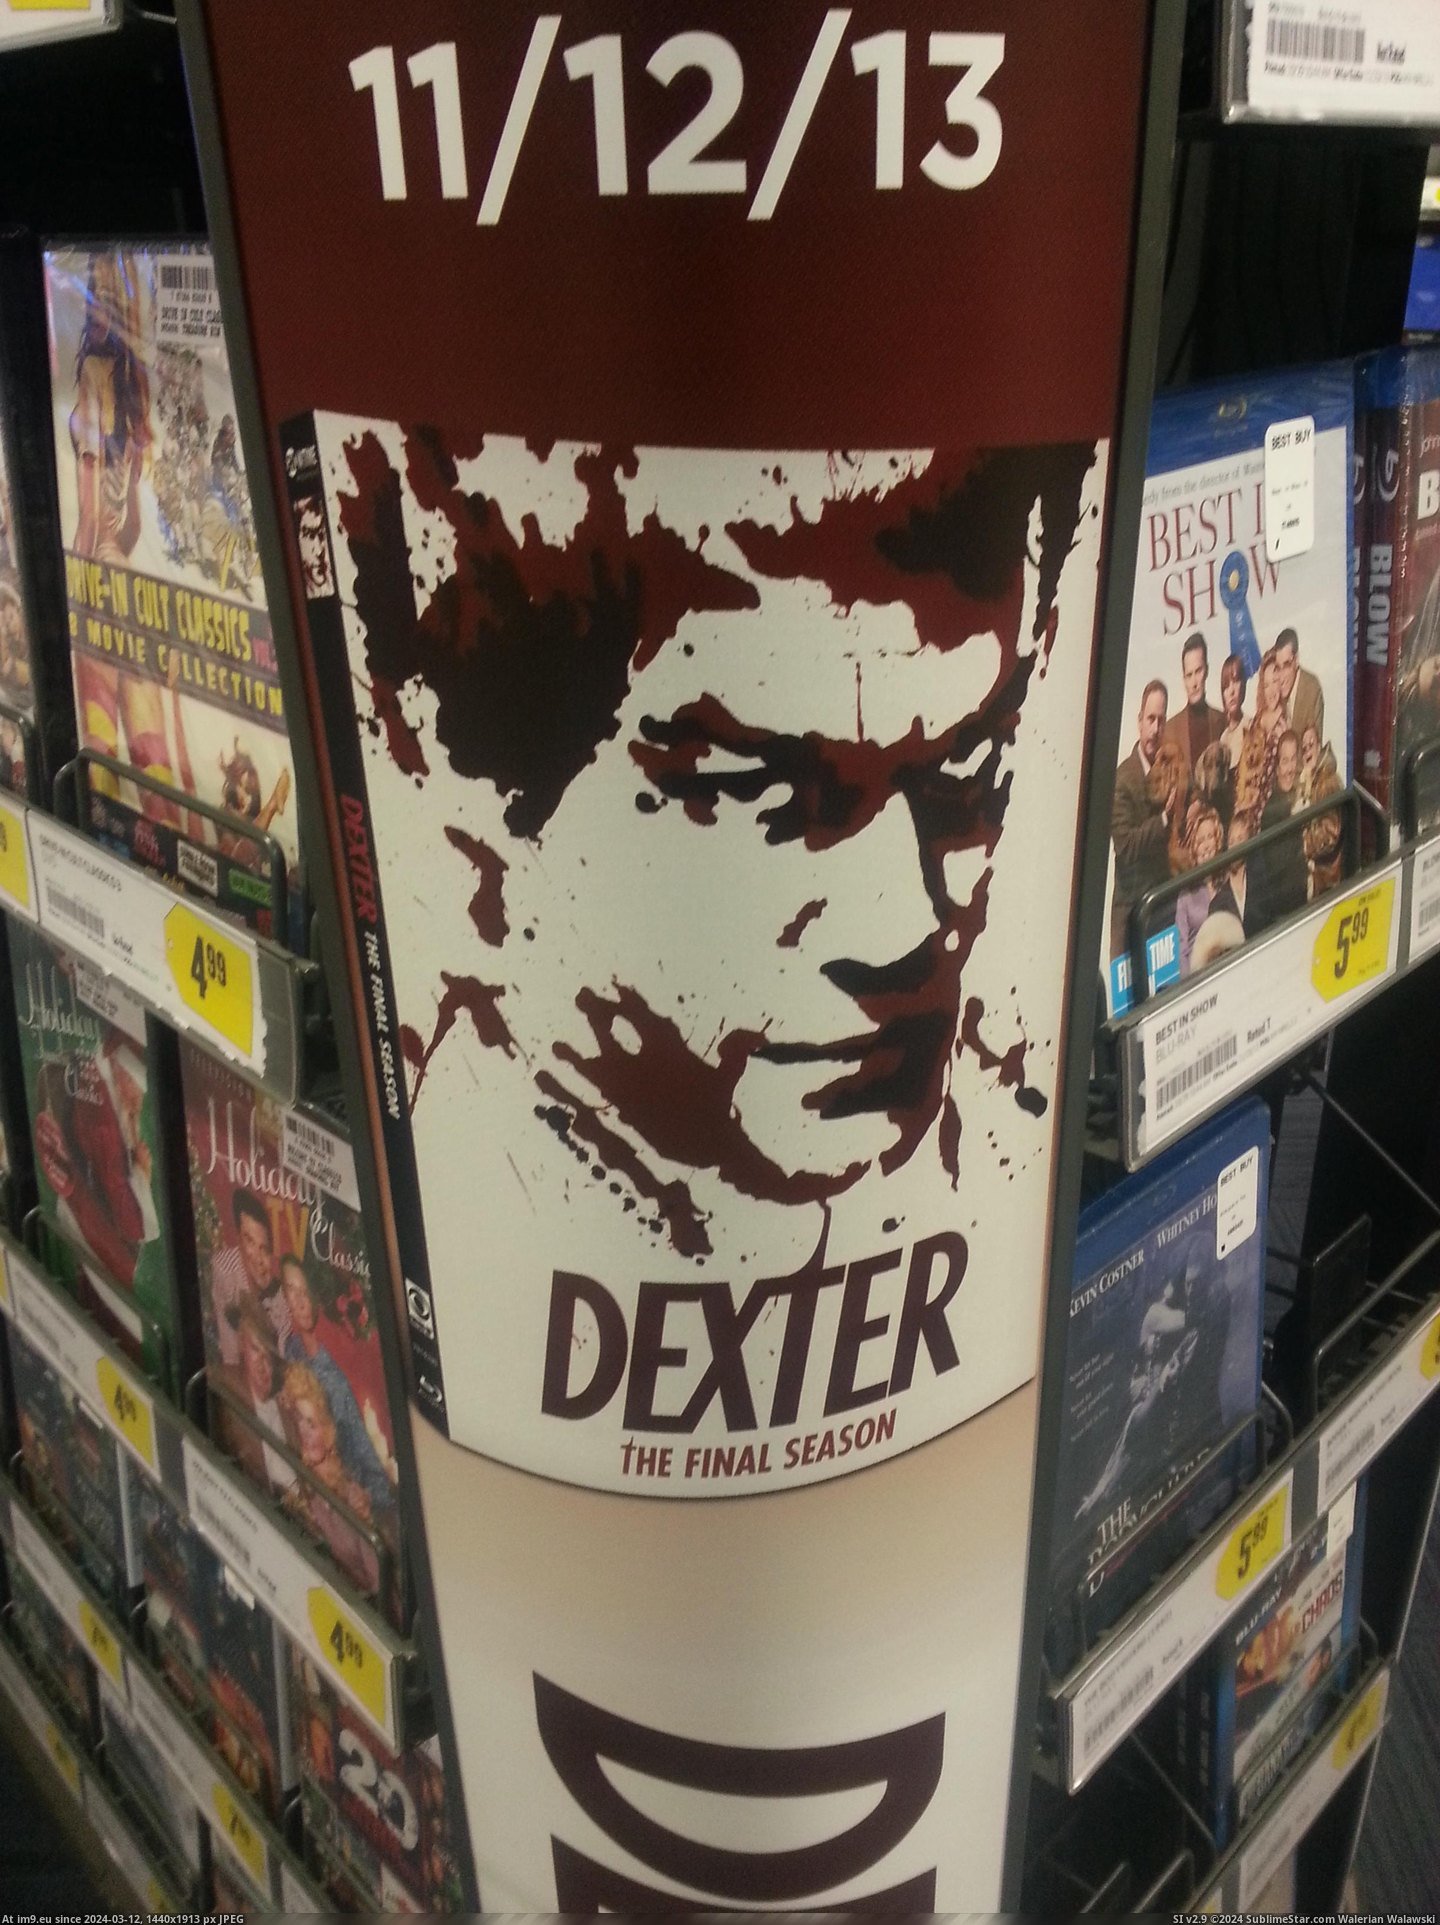 #Buy #Lee #Promo #Bruce #Dexter [Mildlyinteresting] This Dexter promo at Best Buy looks like Bruce Lee Pic. (Изображение из альбом My r/MILDLYINTERESTING favs))